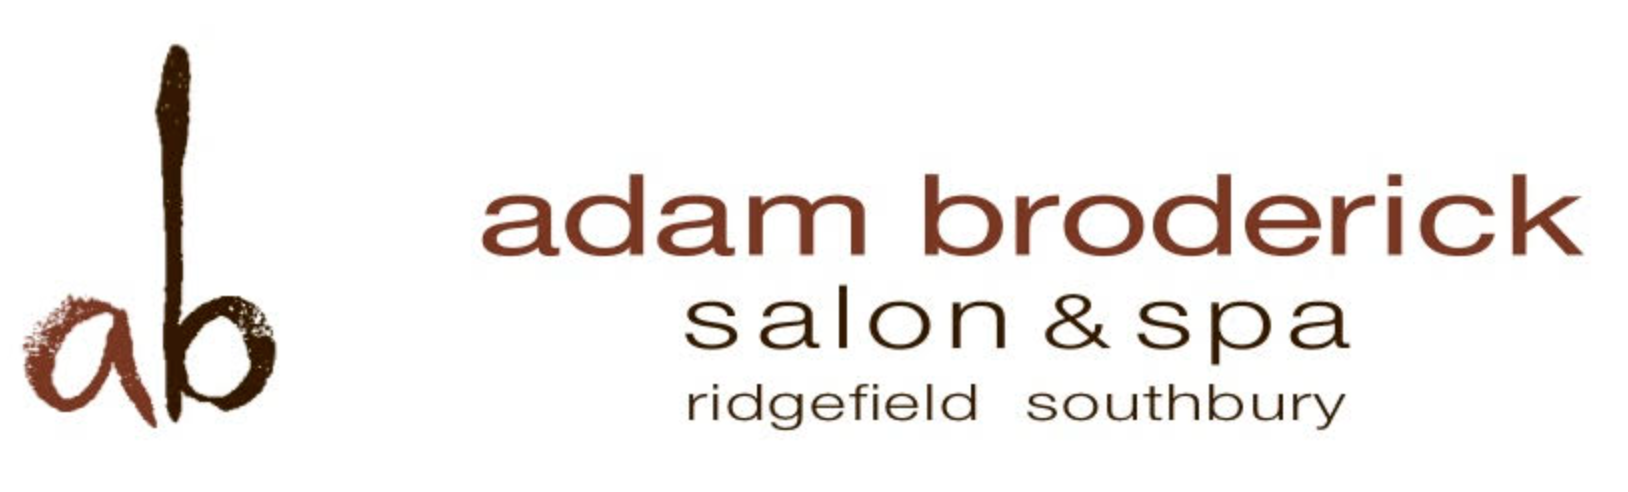 Adam brod logo.png